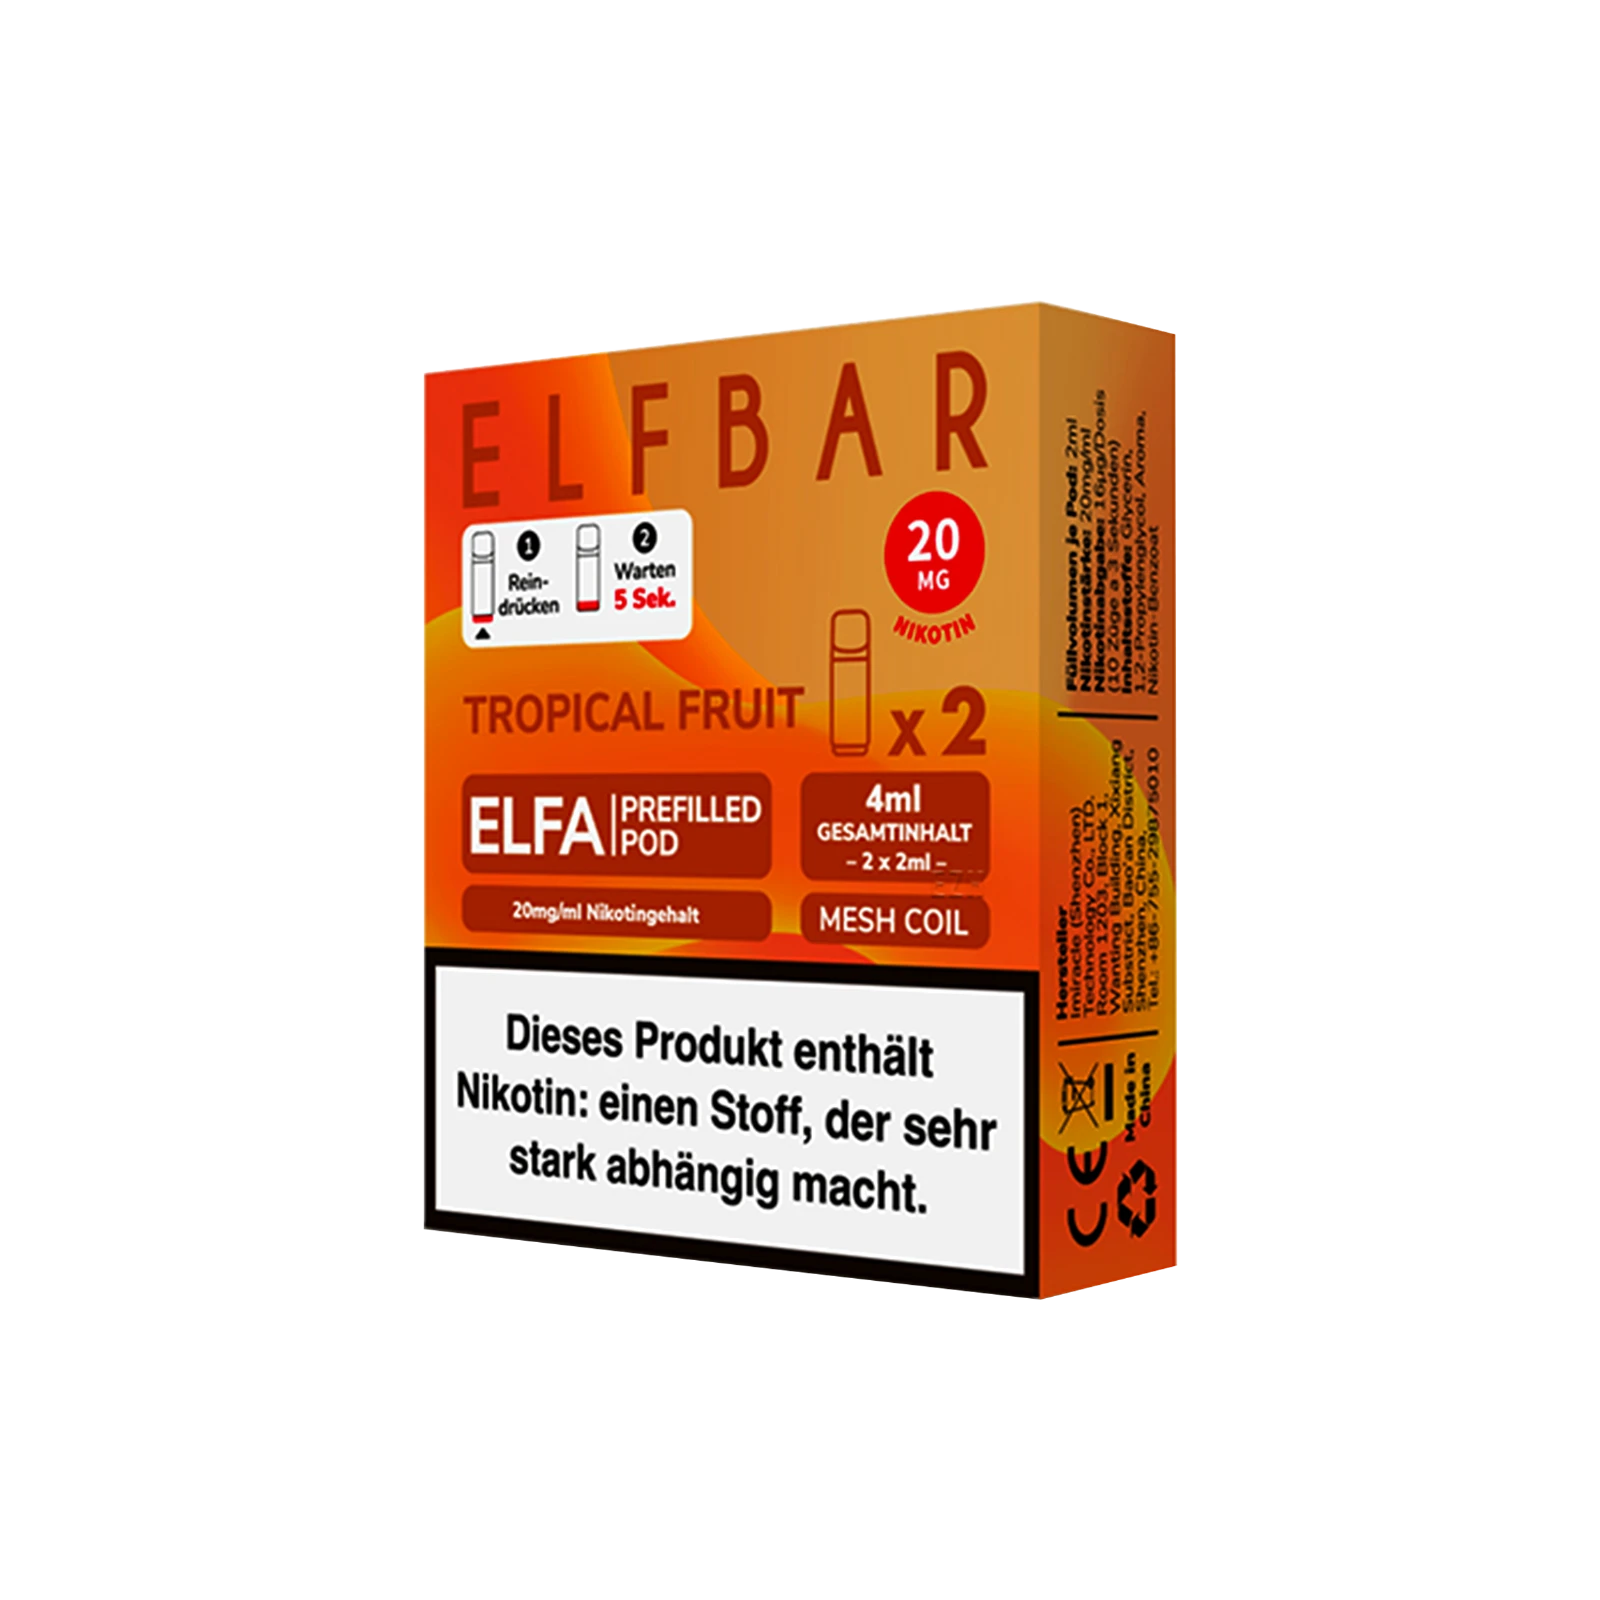 Elf Bar ELFA CP Prefilled Pod Tropical Fruit | Neue Liquid Sorten